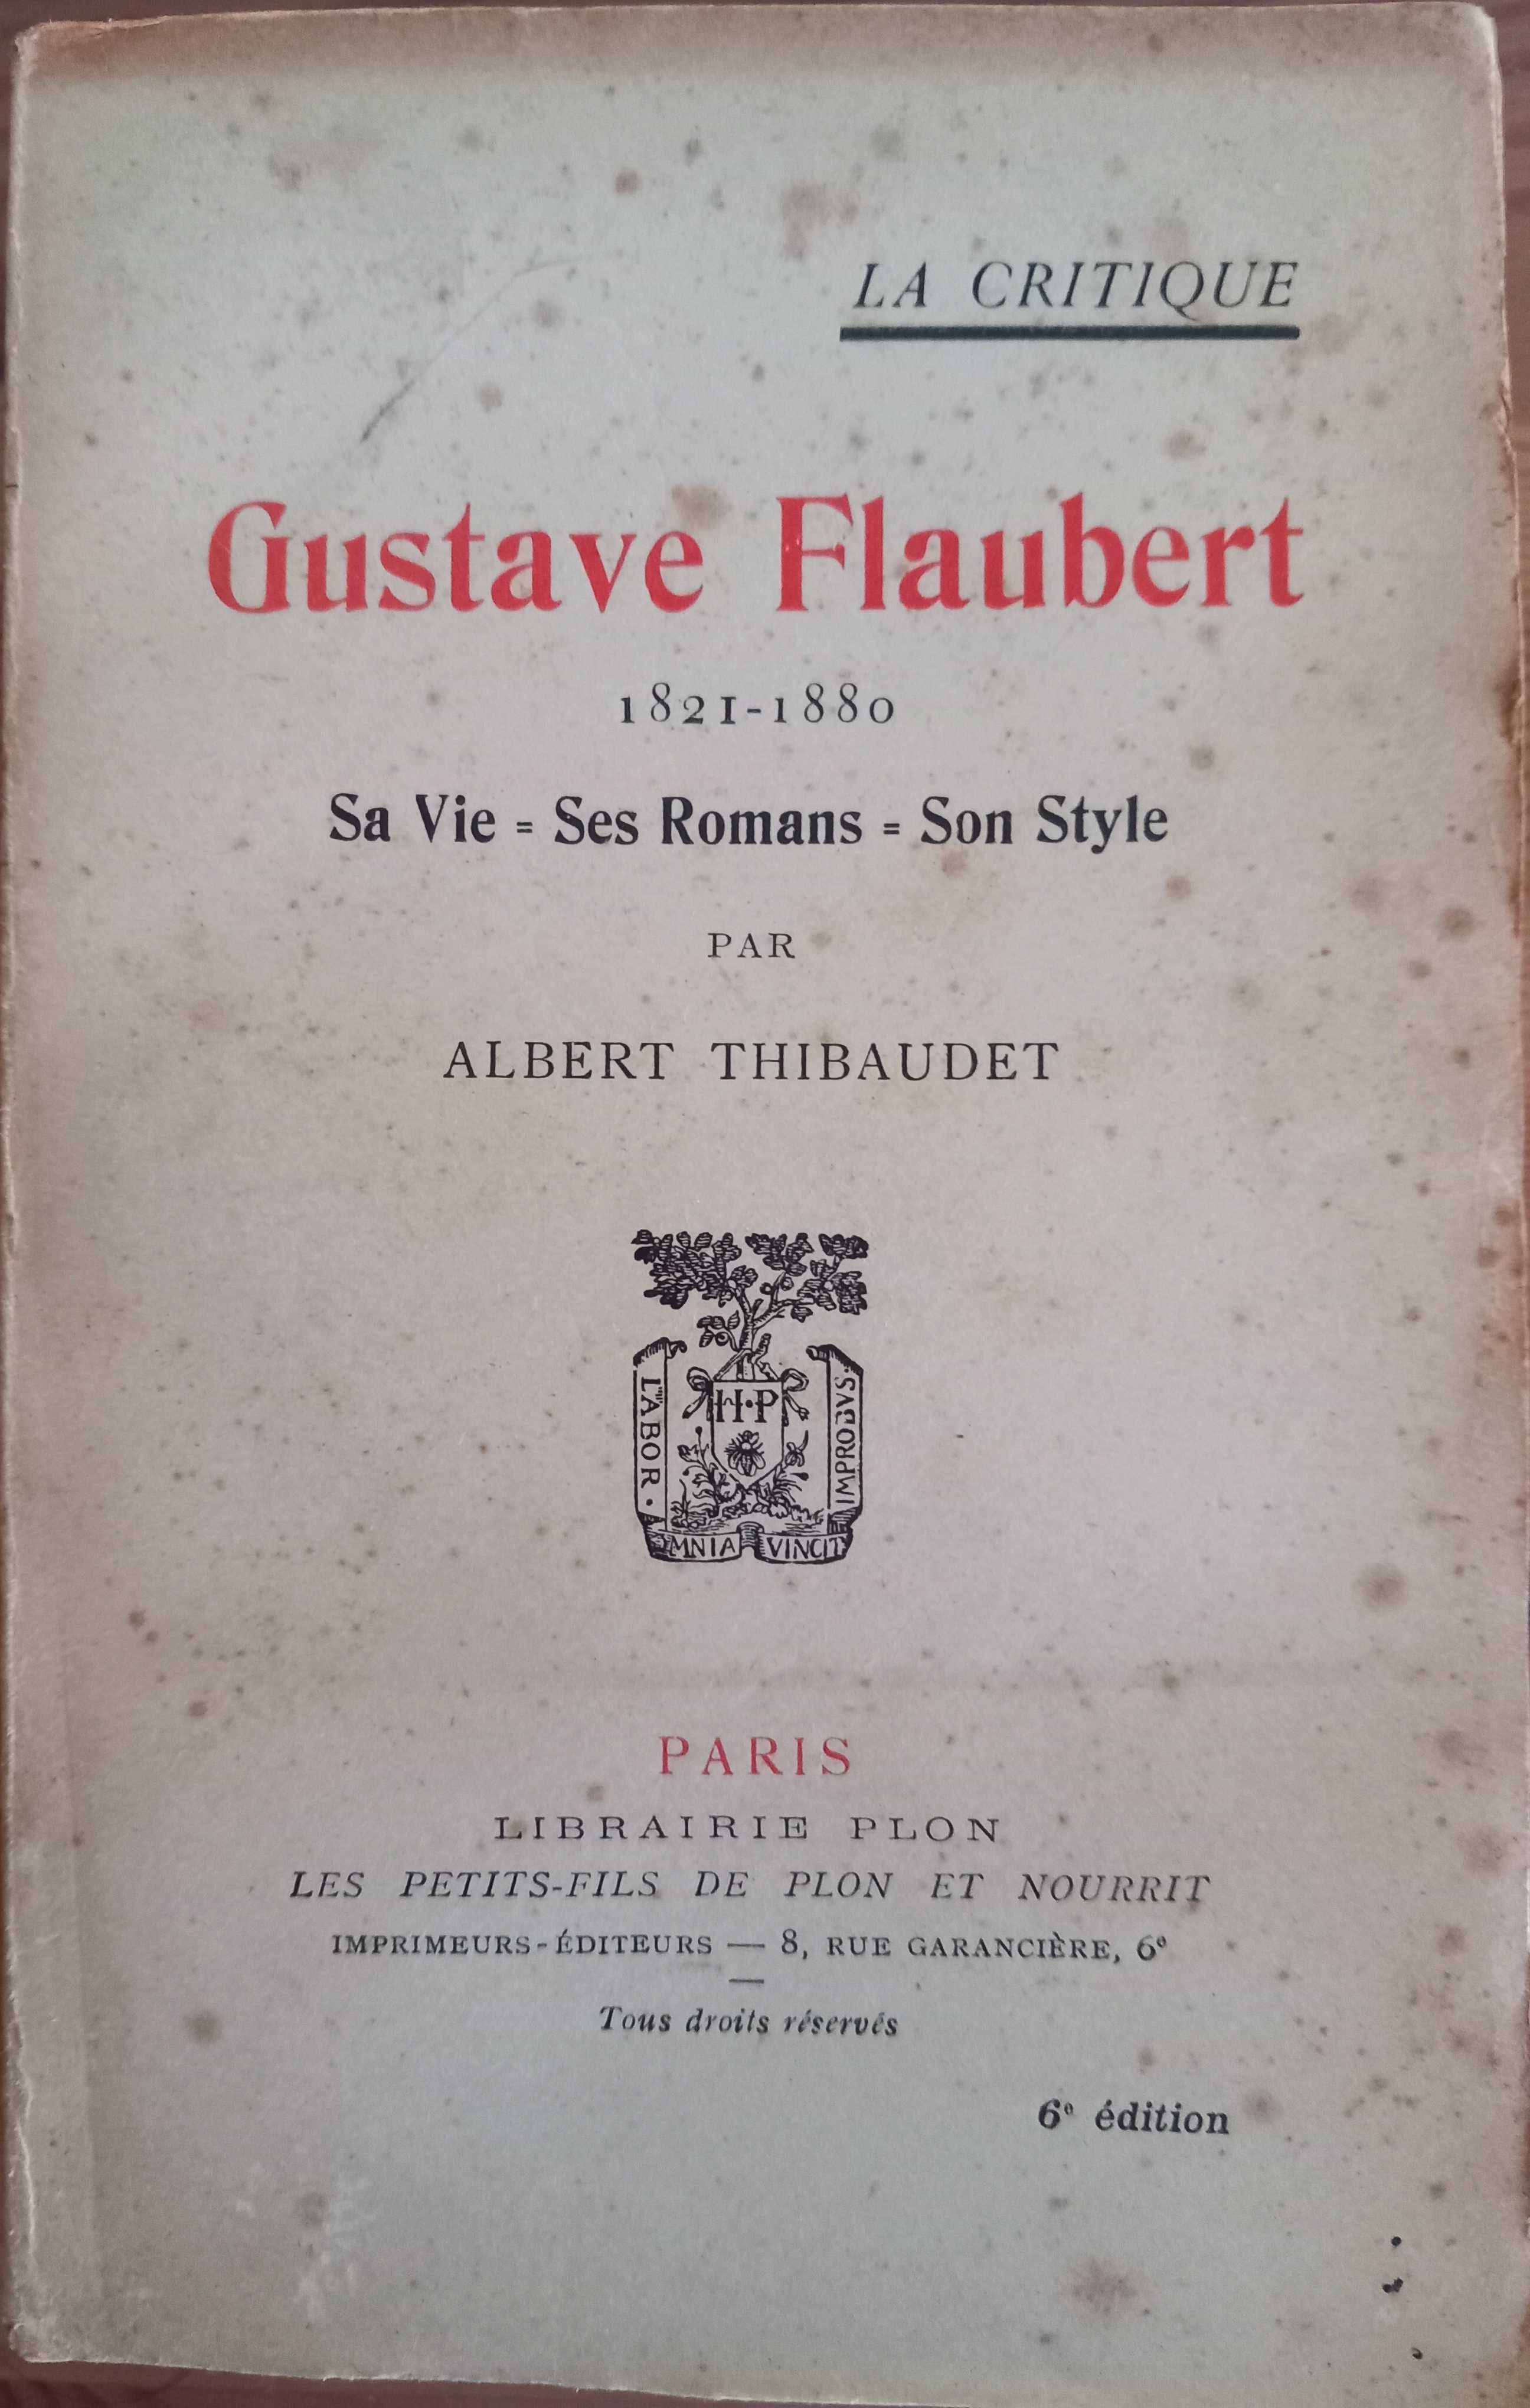 Gustave Flaubert, 1821/1880. Sa vie, ses romans, son style